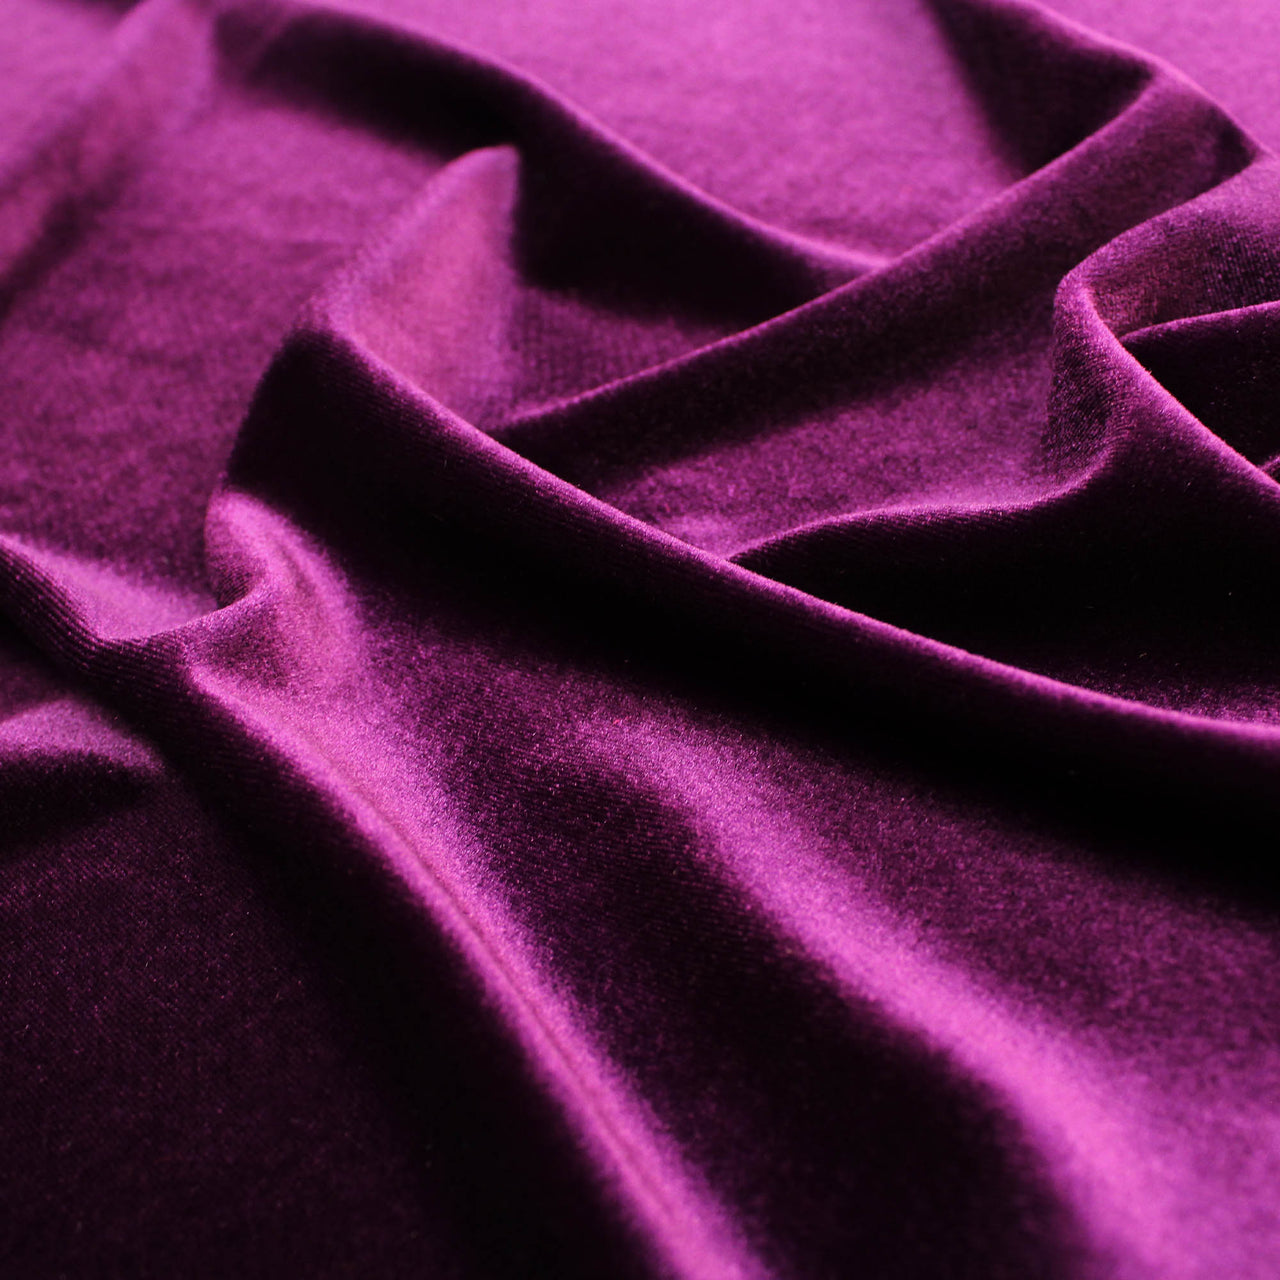 Purple - Spandex Velvet Fabric (4 Way Stretch) - Superior Quality for Dance & Leotards